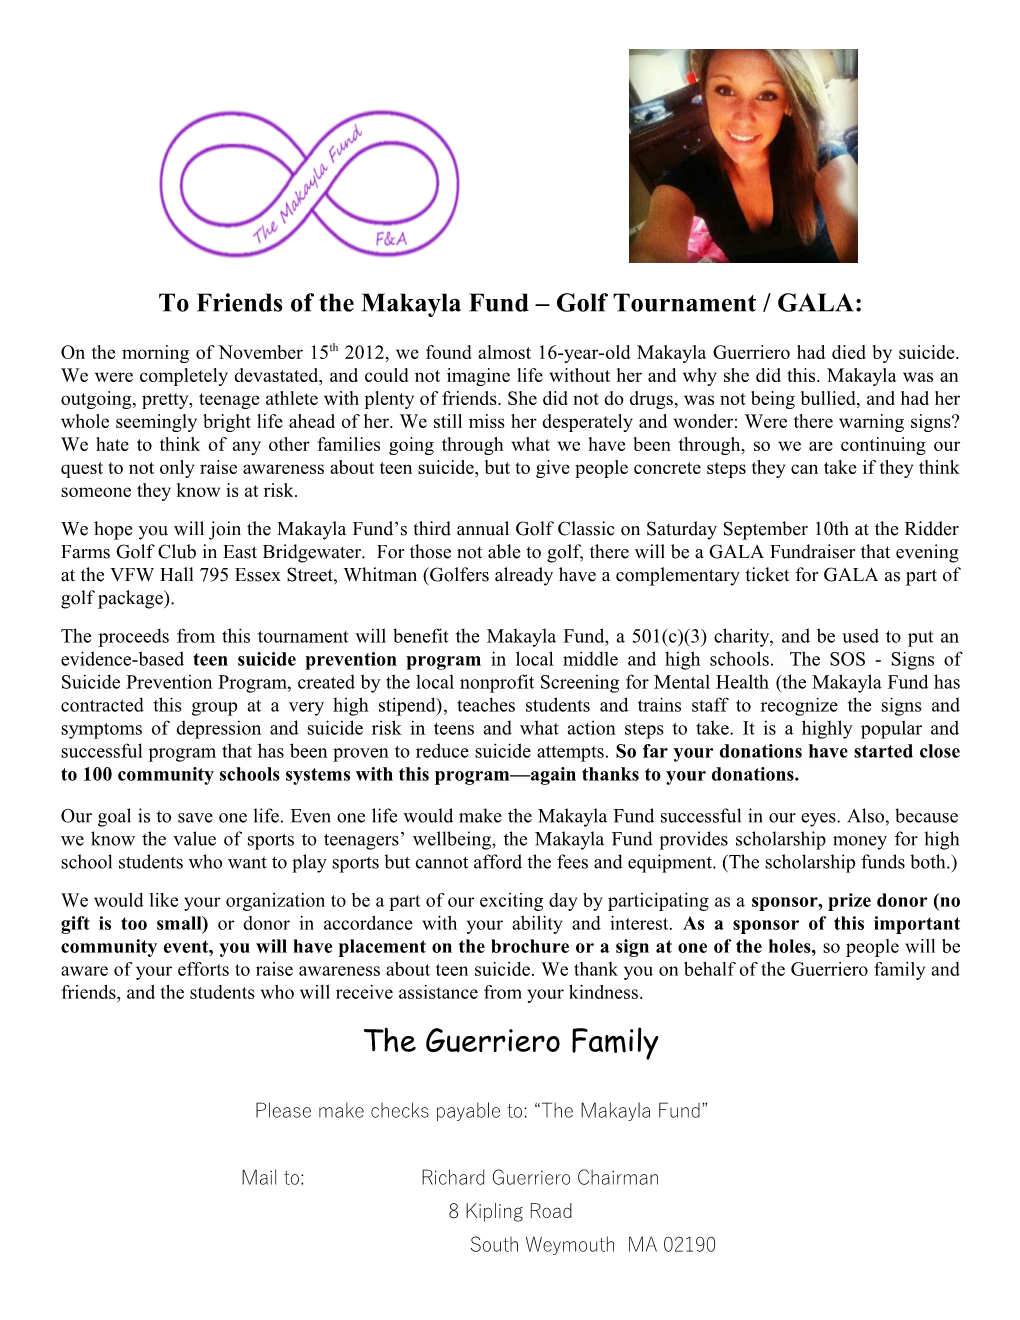 To Friends of the Makayla Fund Golf Tournament / GALA